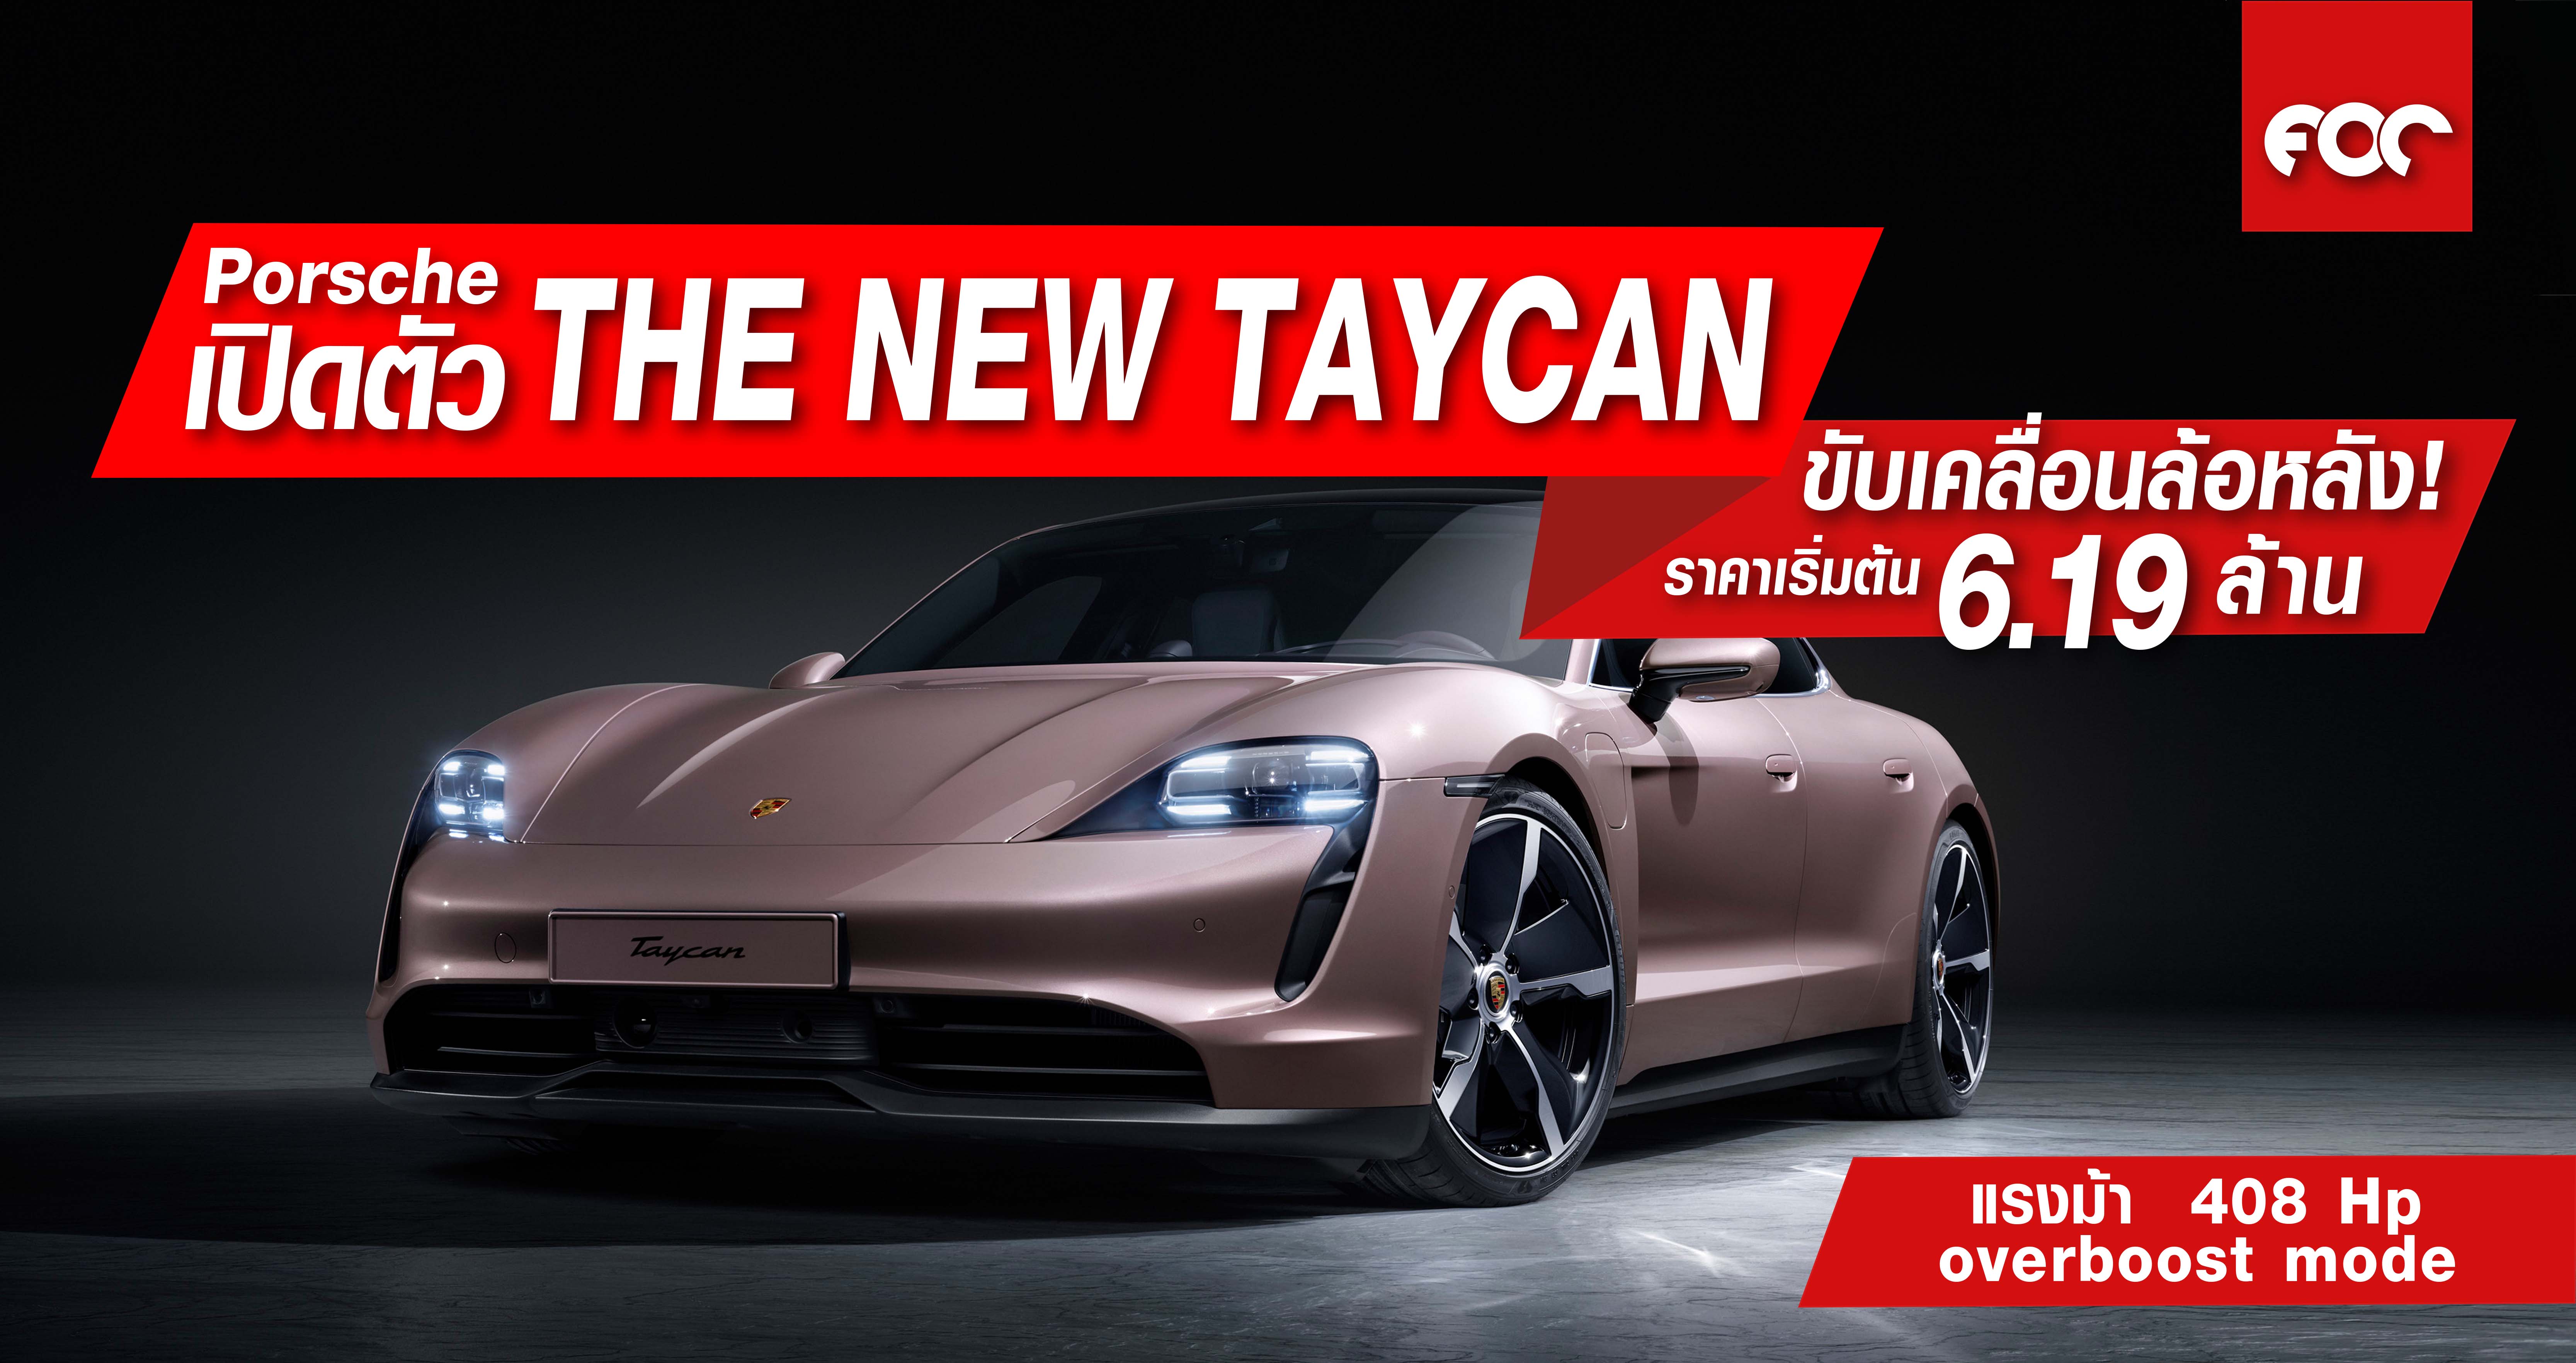 Porsche เปิดตัว THE NEW TAYCAN รุ่นใหม่ล่าสุด  เริ่มต้นขับเคลื่อนล้อหลัง !